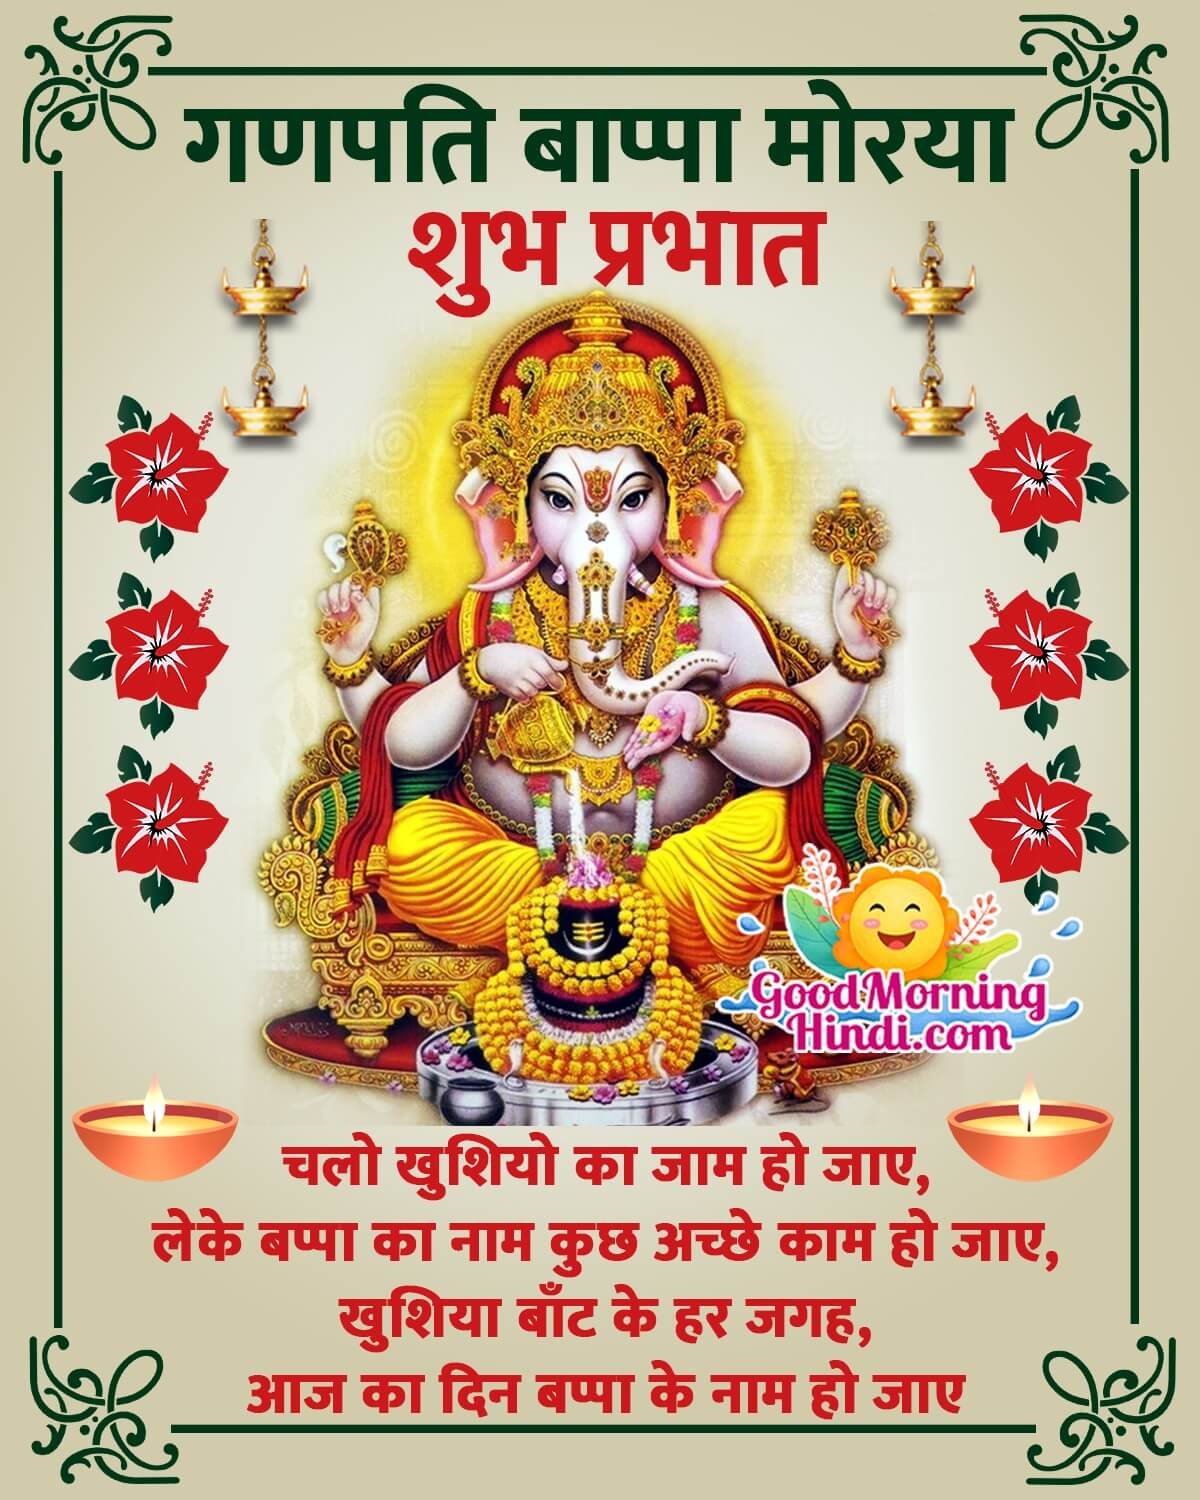 Shubh Prabht Shri Ganesh Wish Image